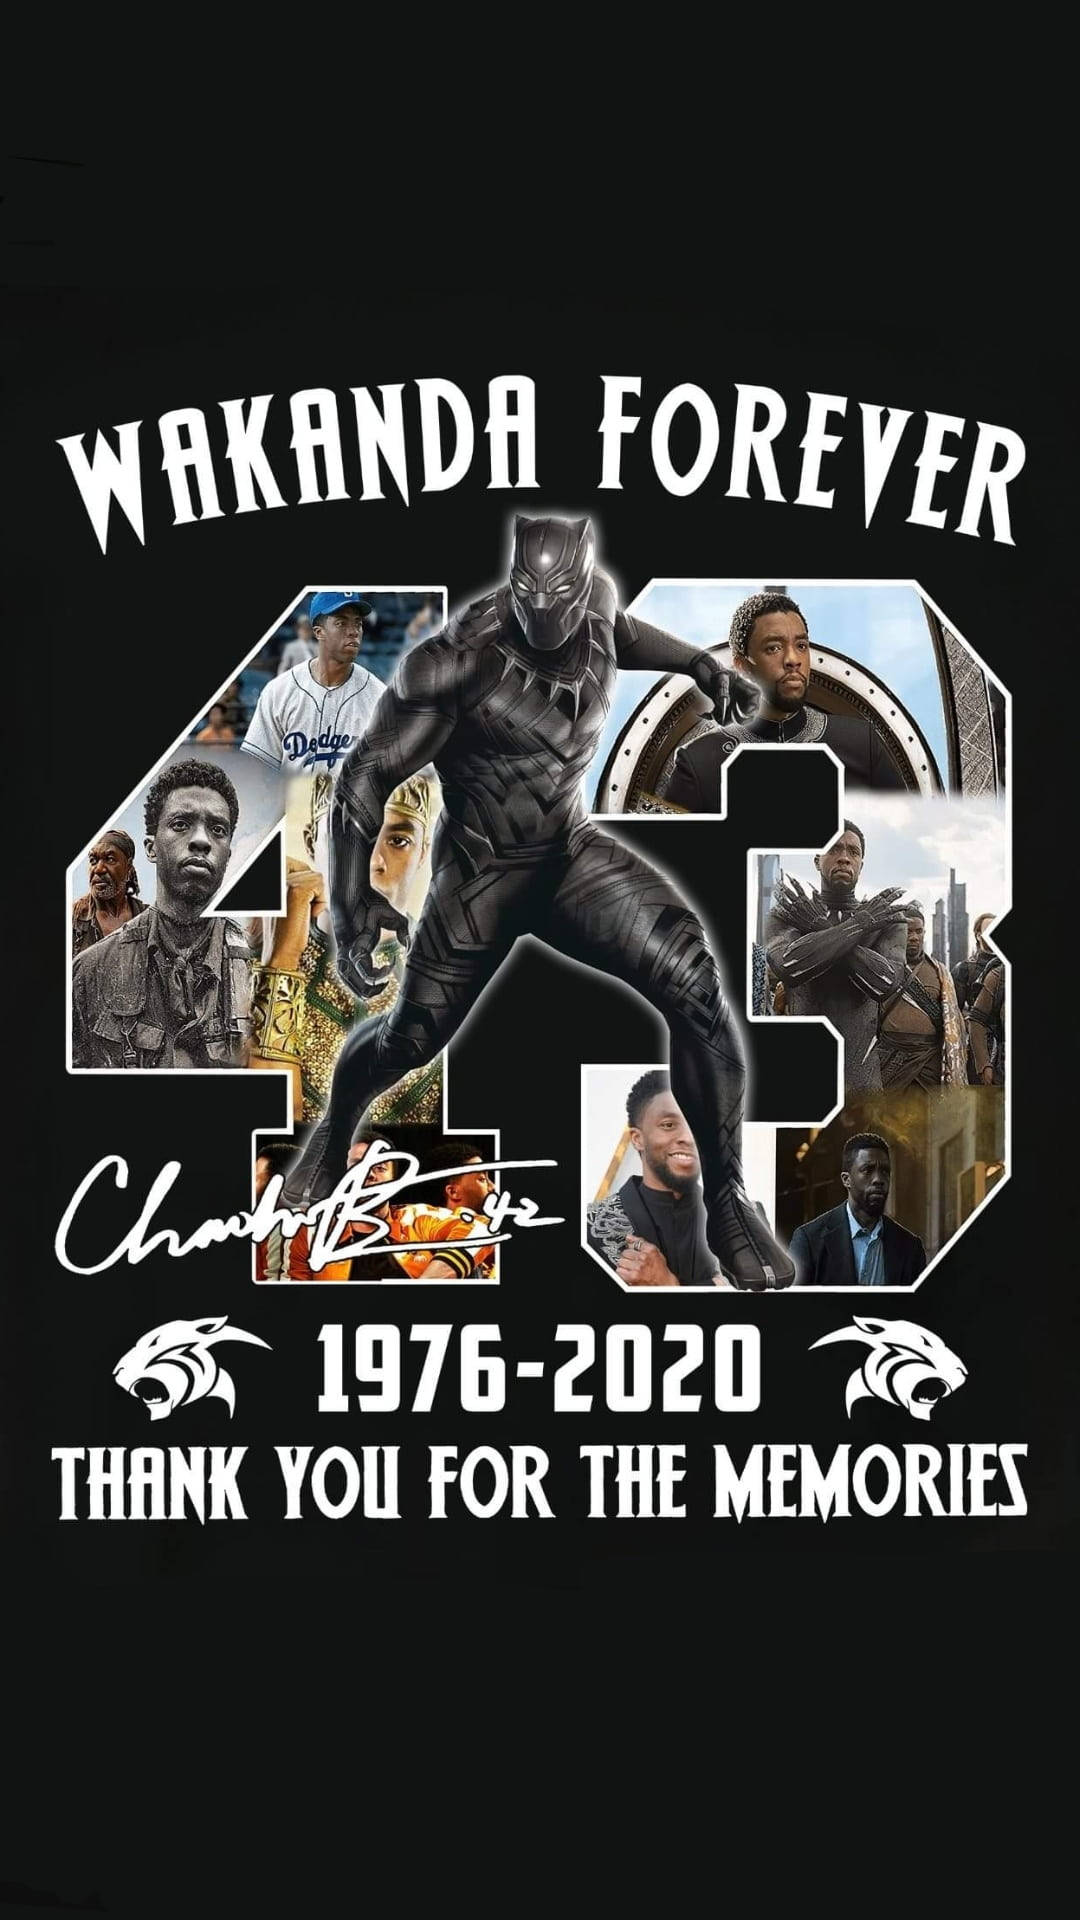 Free Wakanda Forever Wallpaper Downloads, [100+] Wakanda Forever Wallpapers  for FREE 